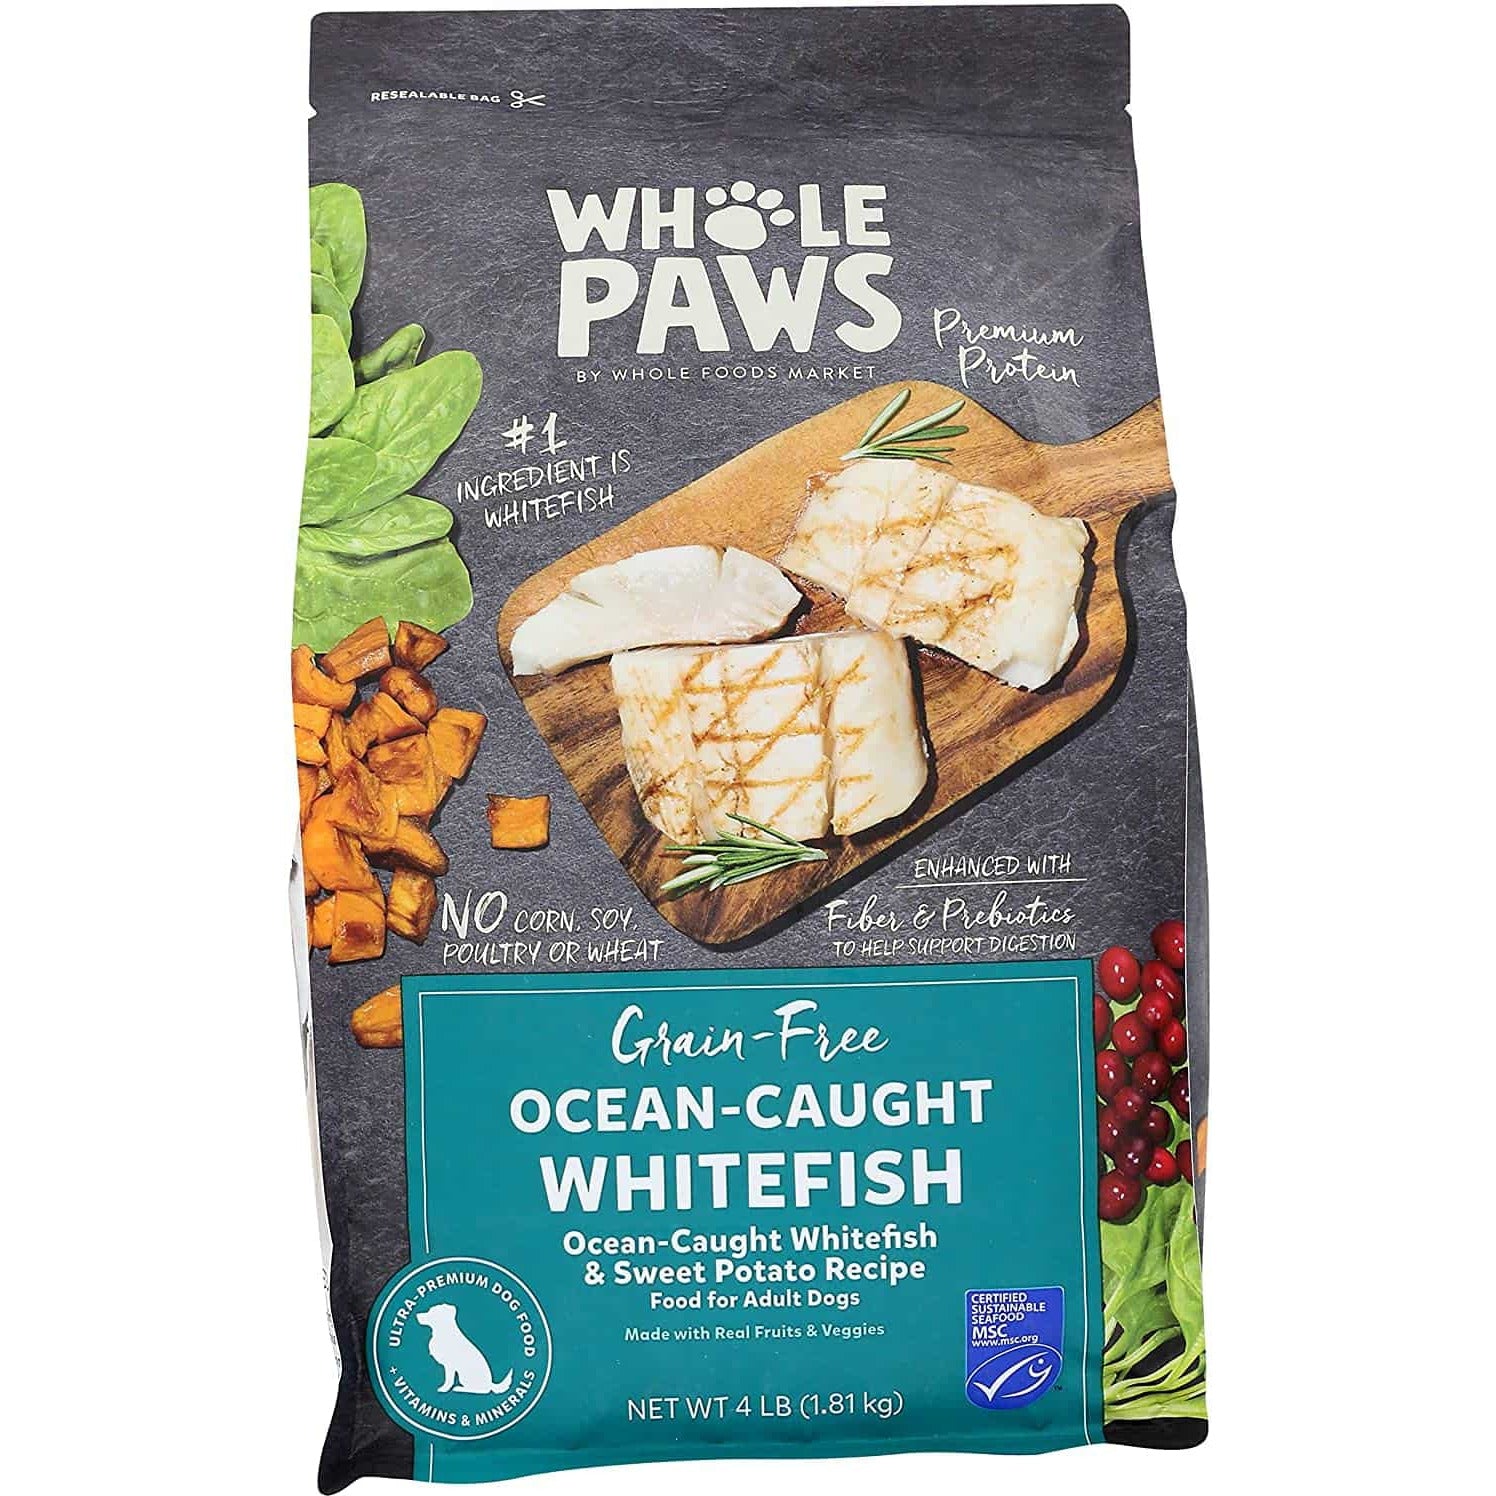 Whole Paws Grain-Free Adult Dog Food, Ocean-Caught Whitefish & Sweet Potato Recipe, 4 Lb.